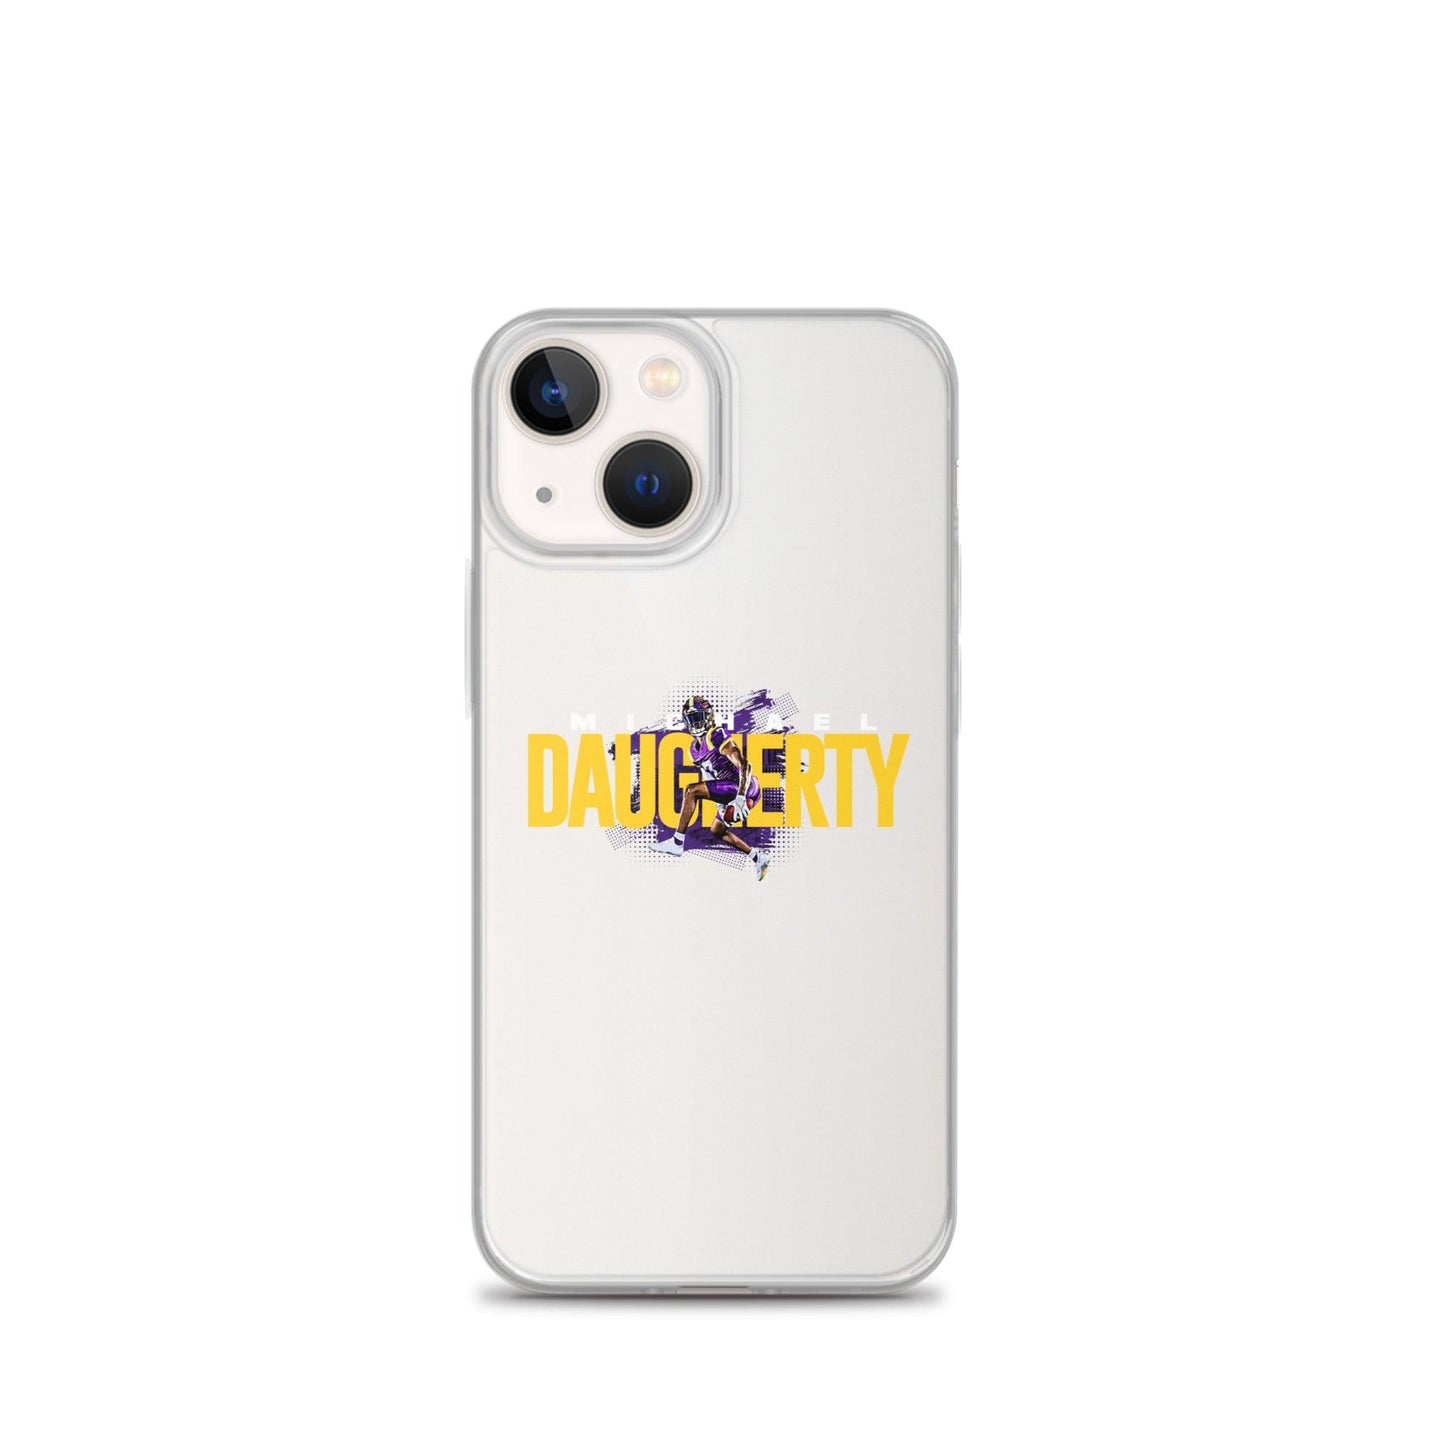 Michael Daugherty "Gameday" iPhone Case - Fan Arch